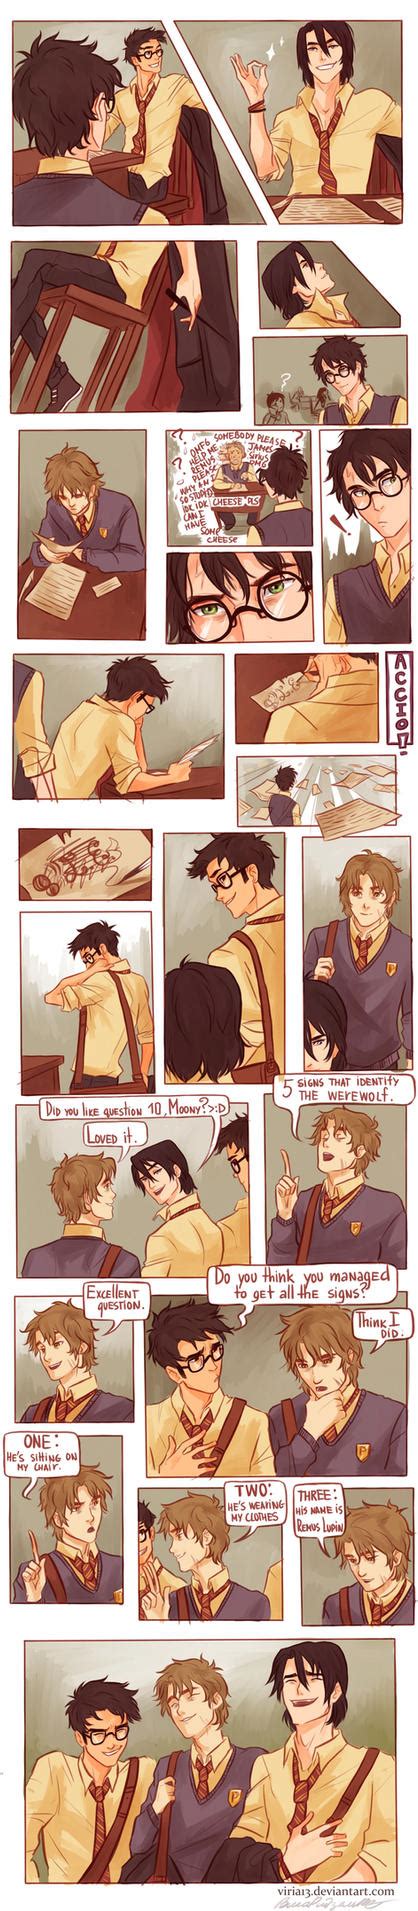 Harry Potter By Viria On DeviantArt